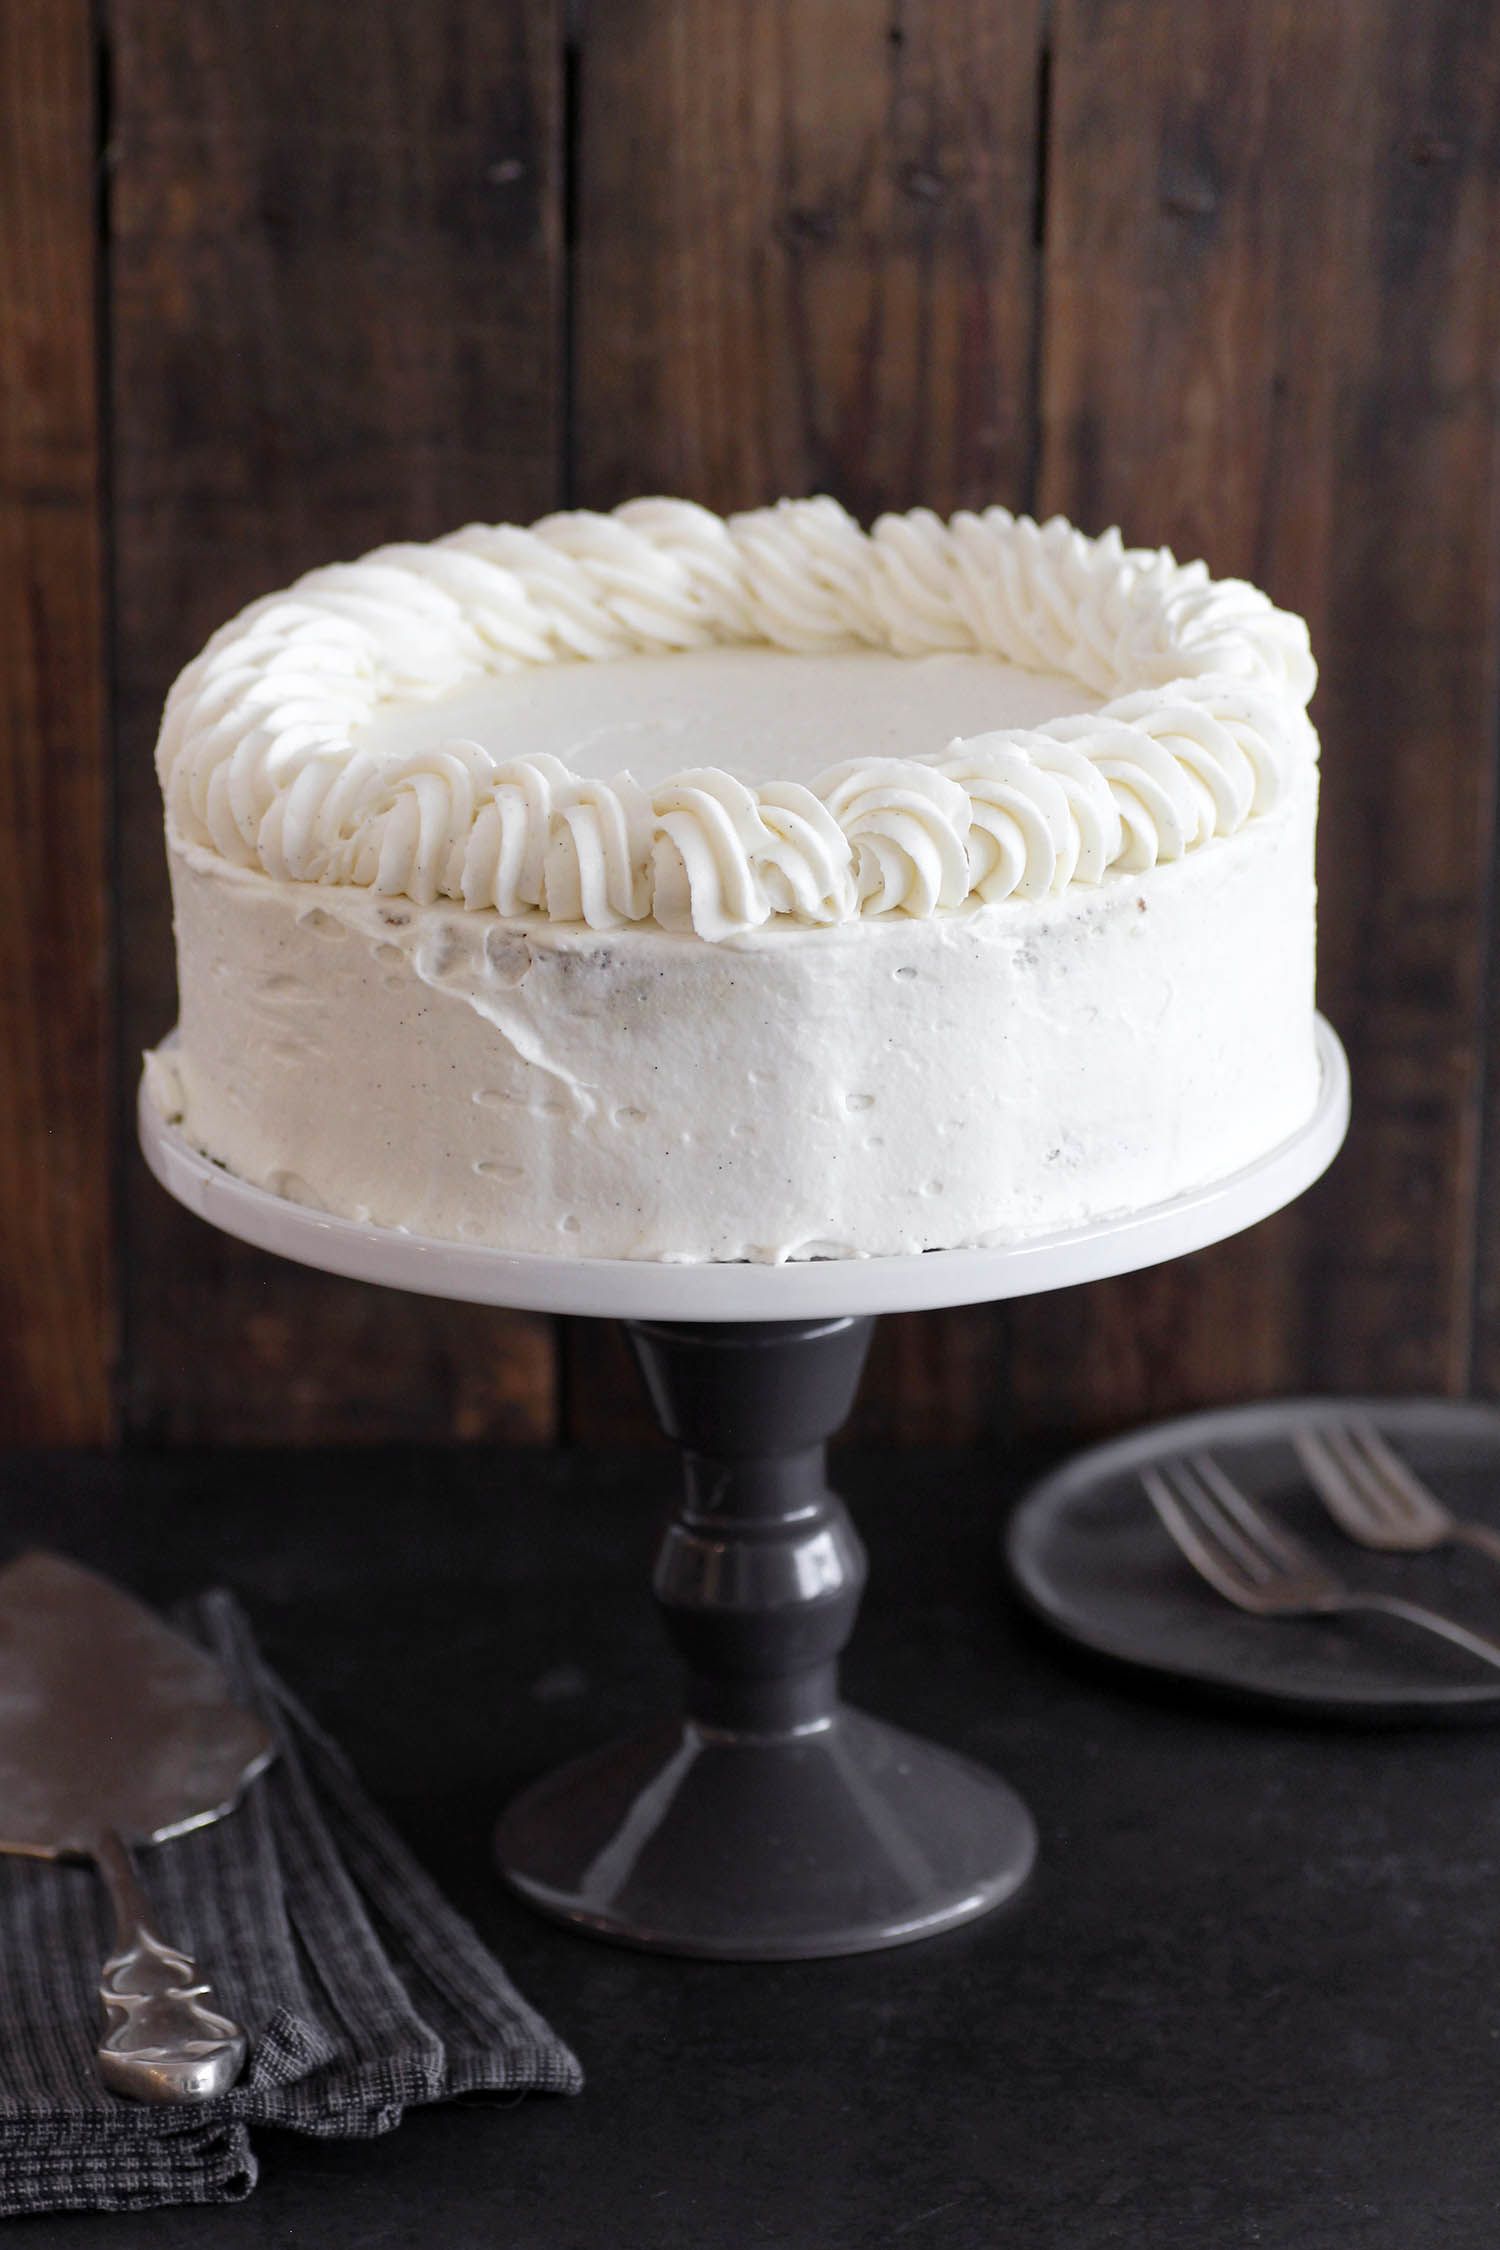 The Most Amazing Classic Vanilla Cake